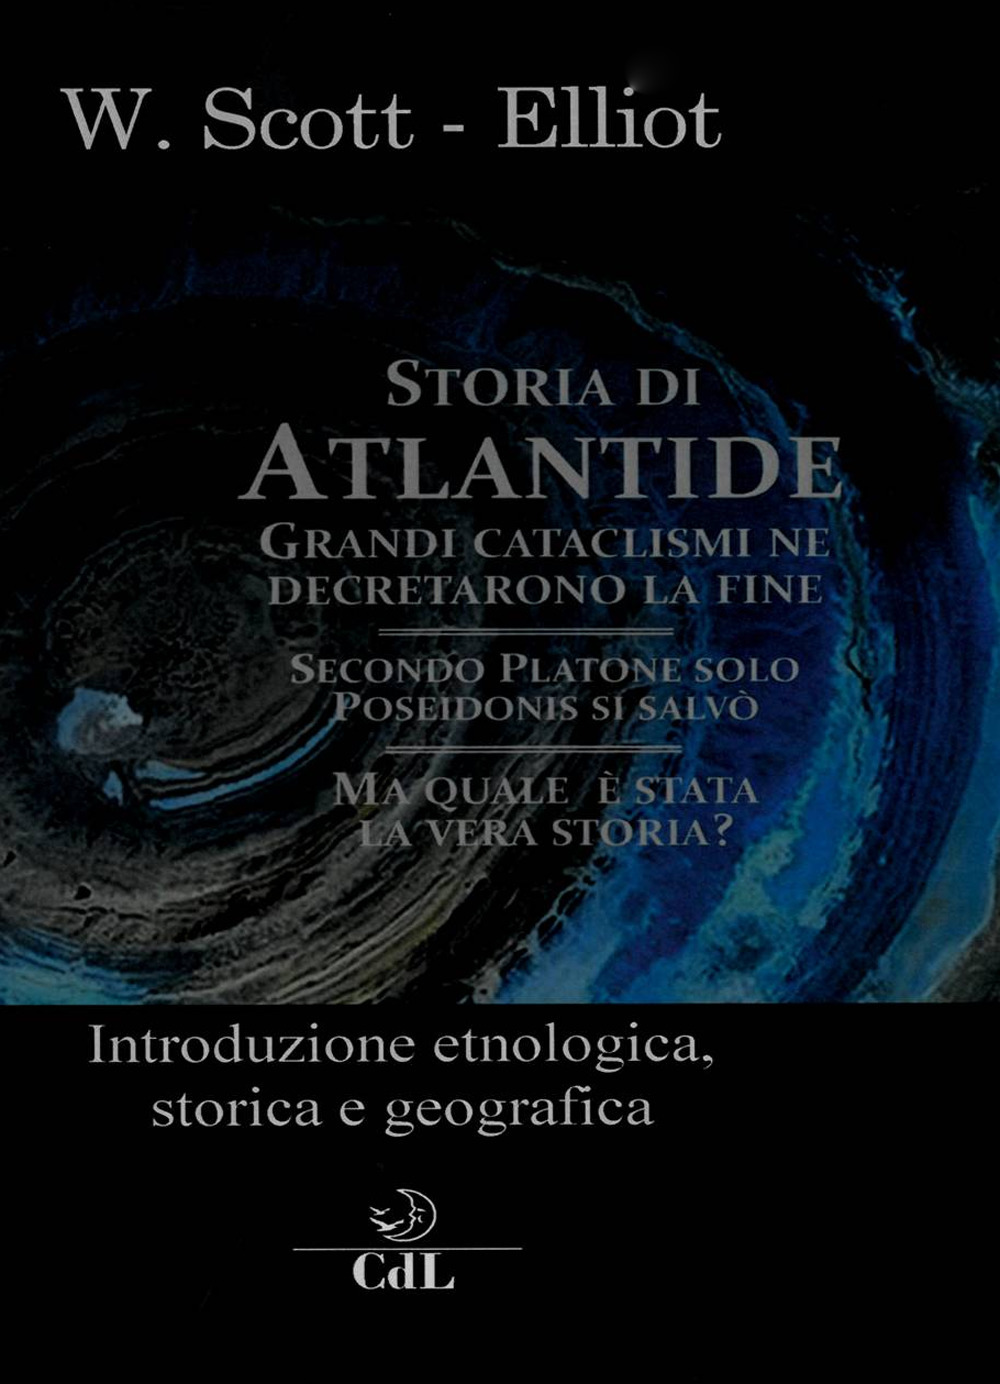 Storia di Atlantide. Introduzione etnologica, storica e geografica